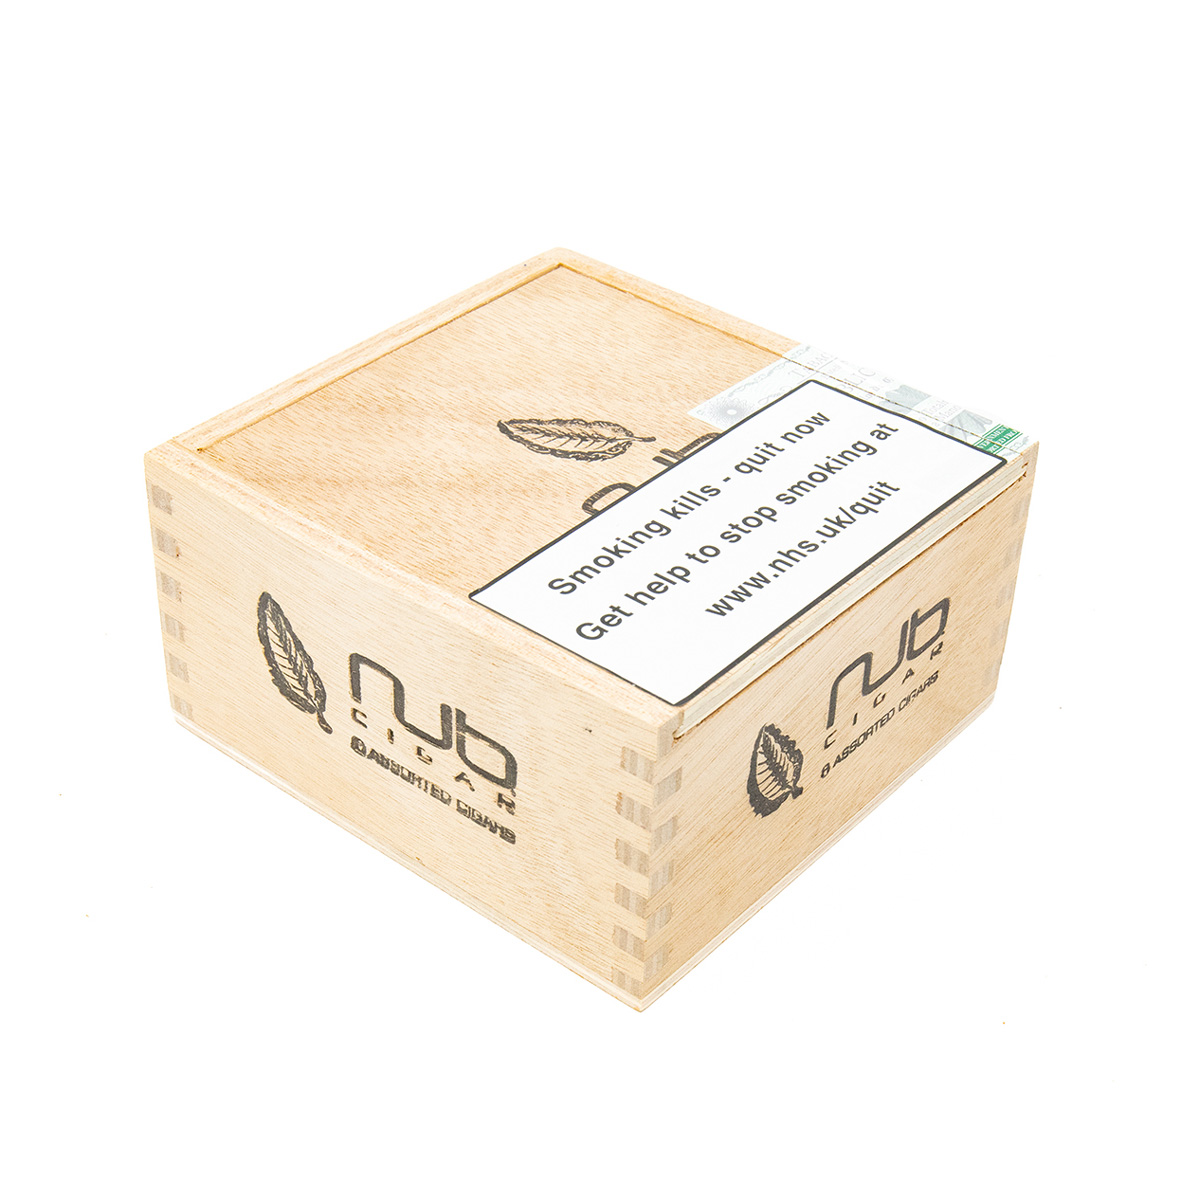 Studio Tobac - Nicaragua - Nub Sampler 8 Box (Made by Oliva Cigars) (Box of 8)